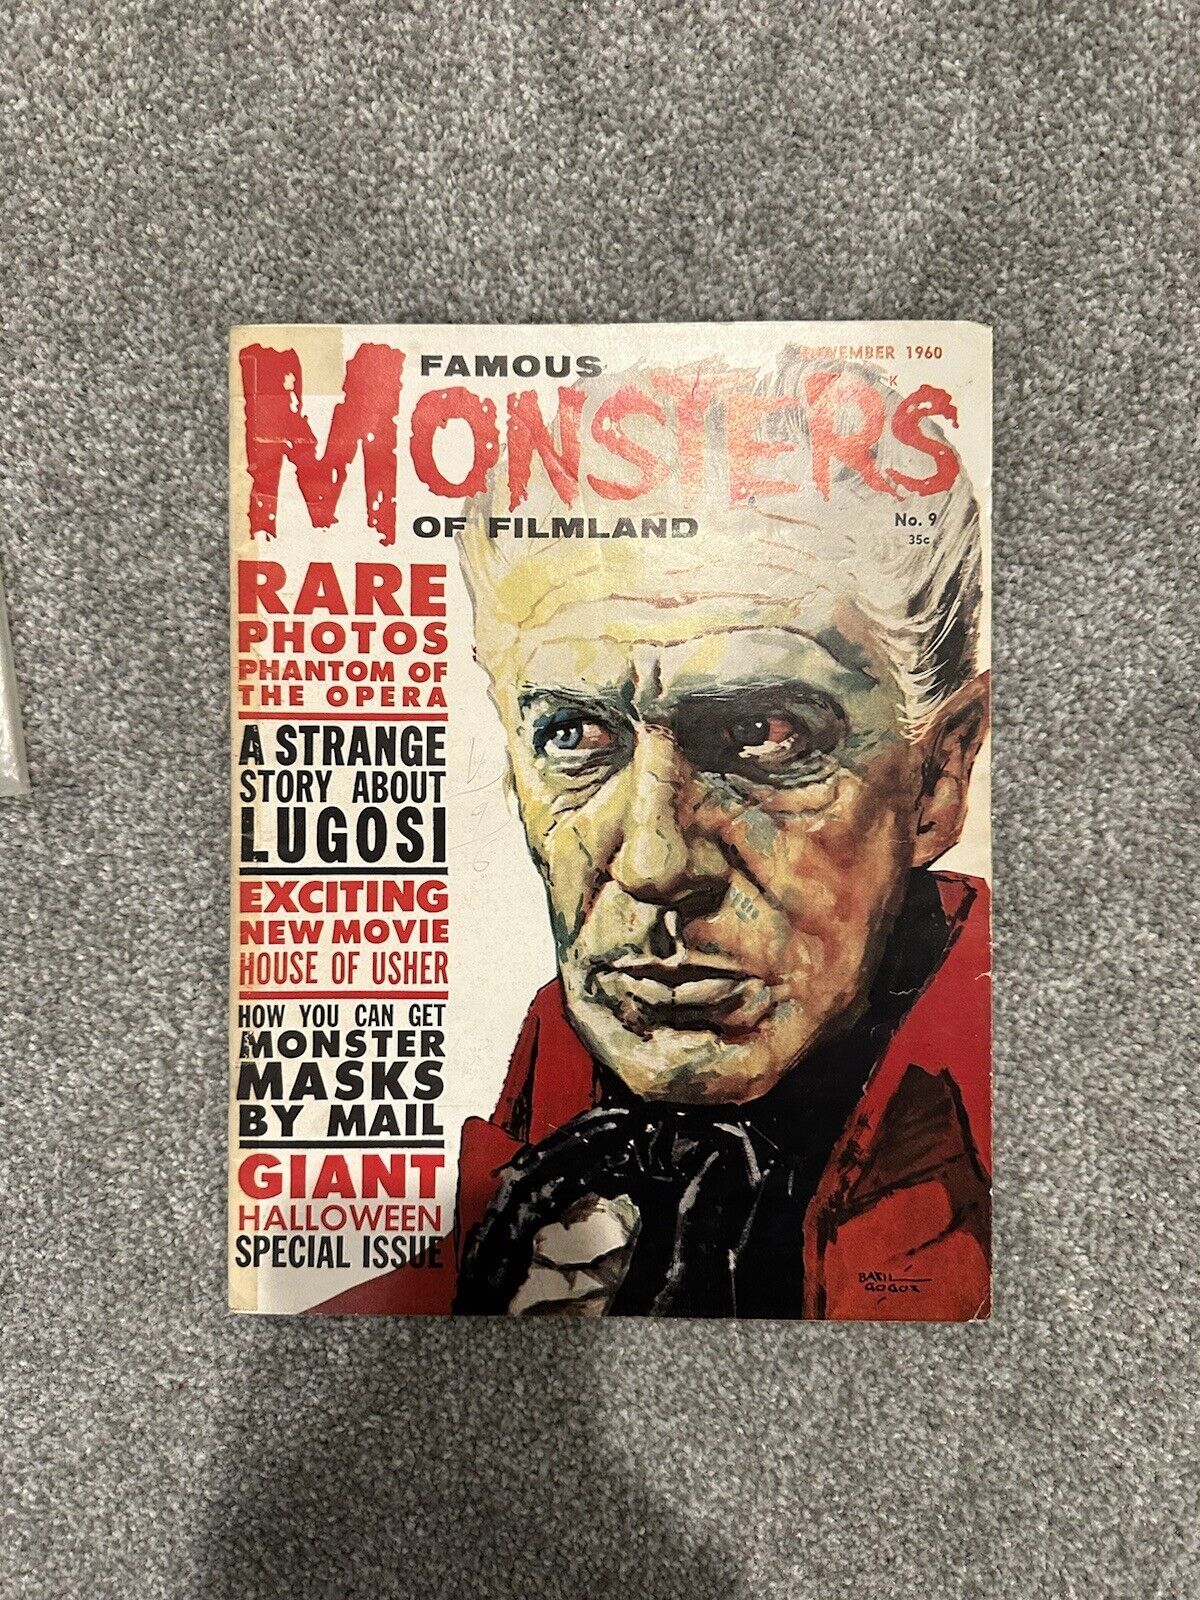 Orig Nov 1960 No 9 FAMOUS MONSTERS OF FILMLAND Magazine - VINCENT PRICE cover